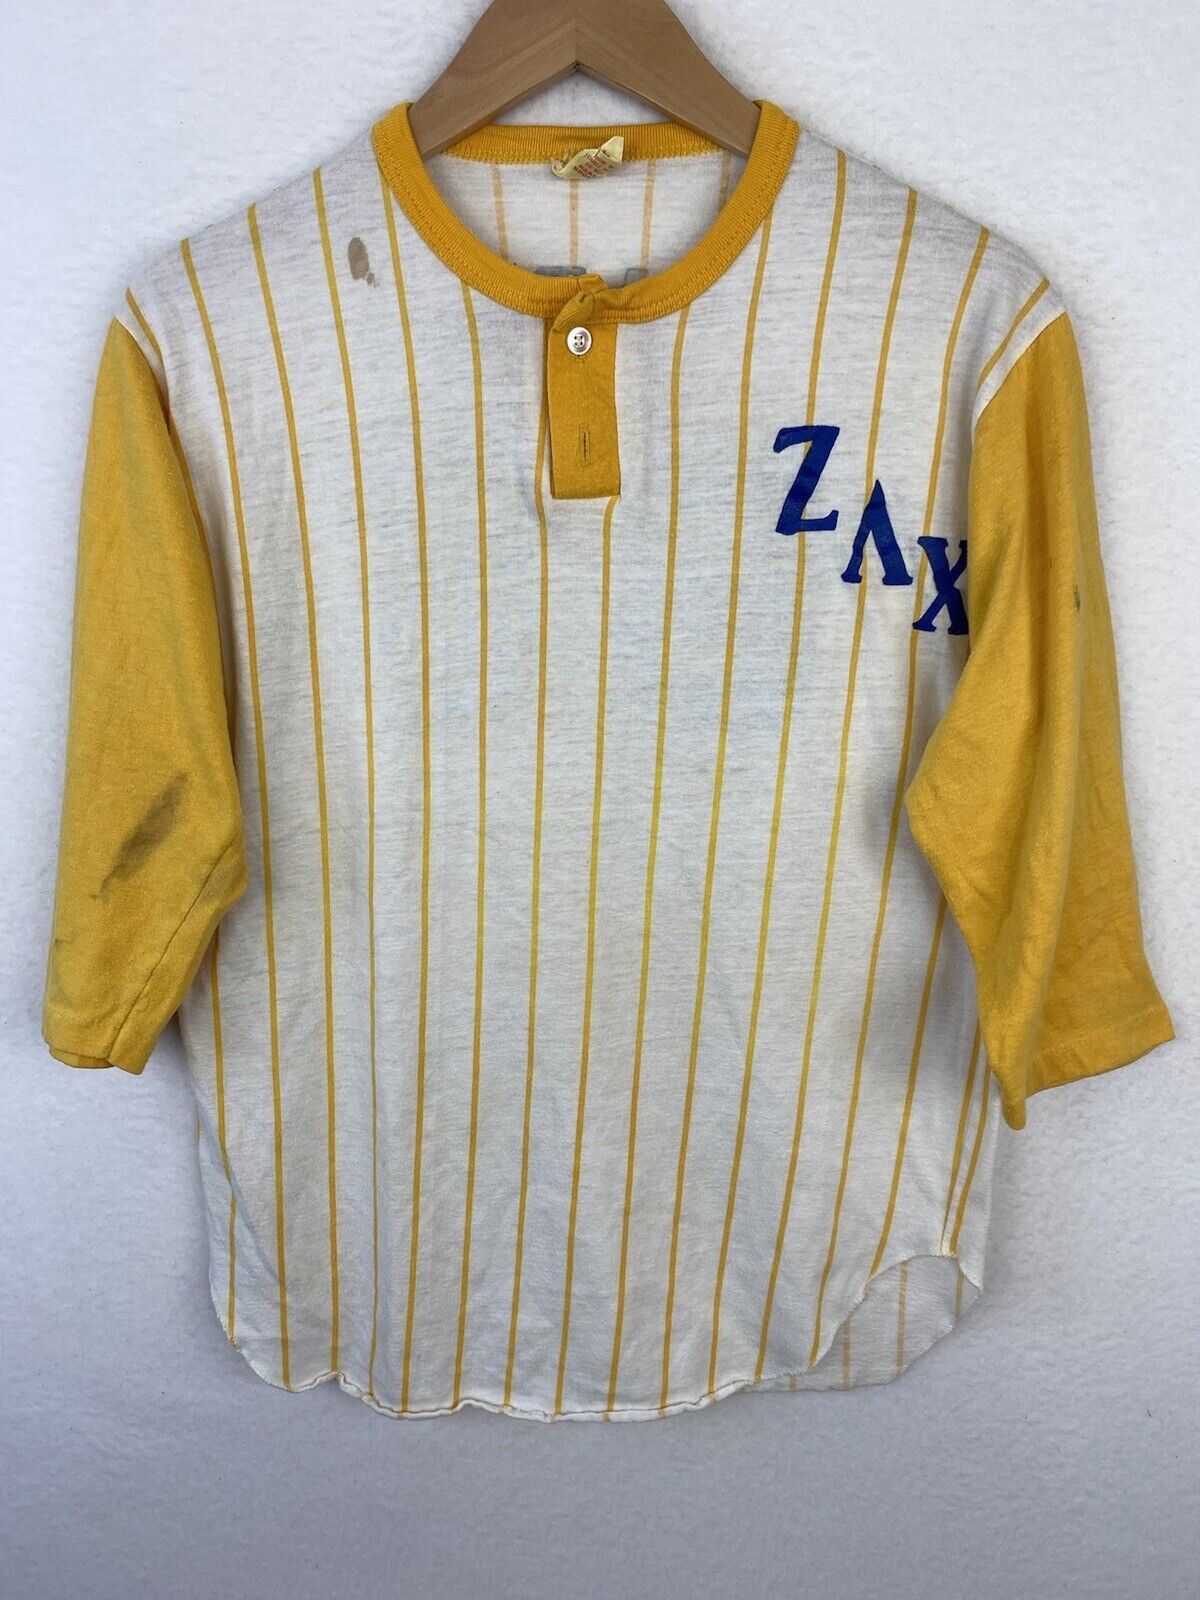 Vtg 70s 80s Sorority Fraternity Paramount Yellow Pin Stripe Softball Jersey M